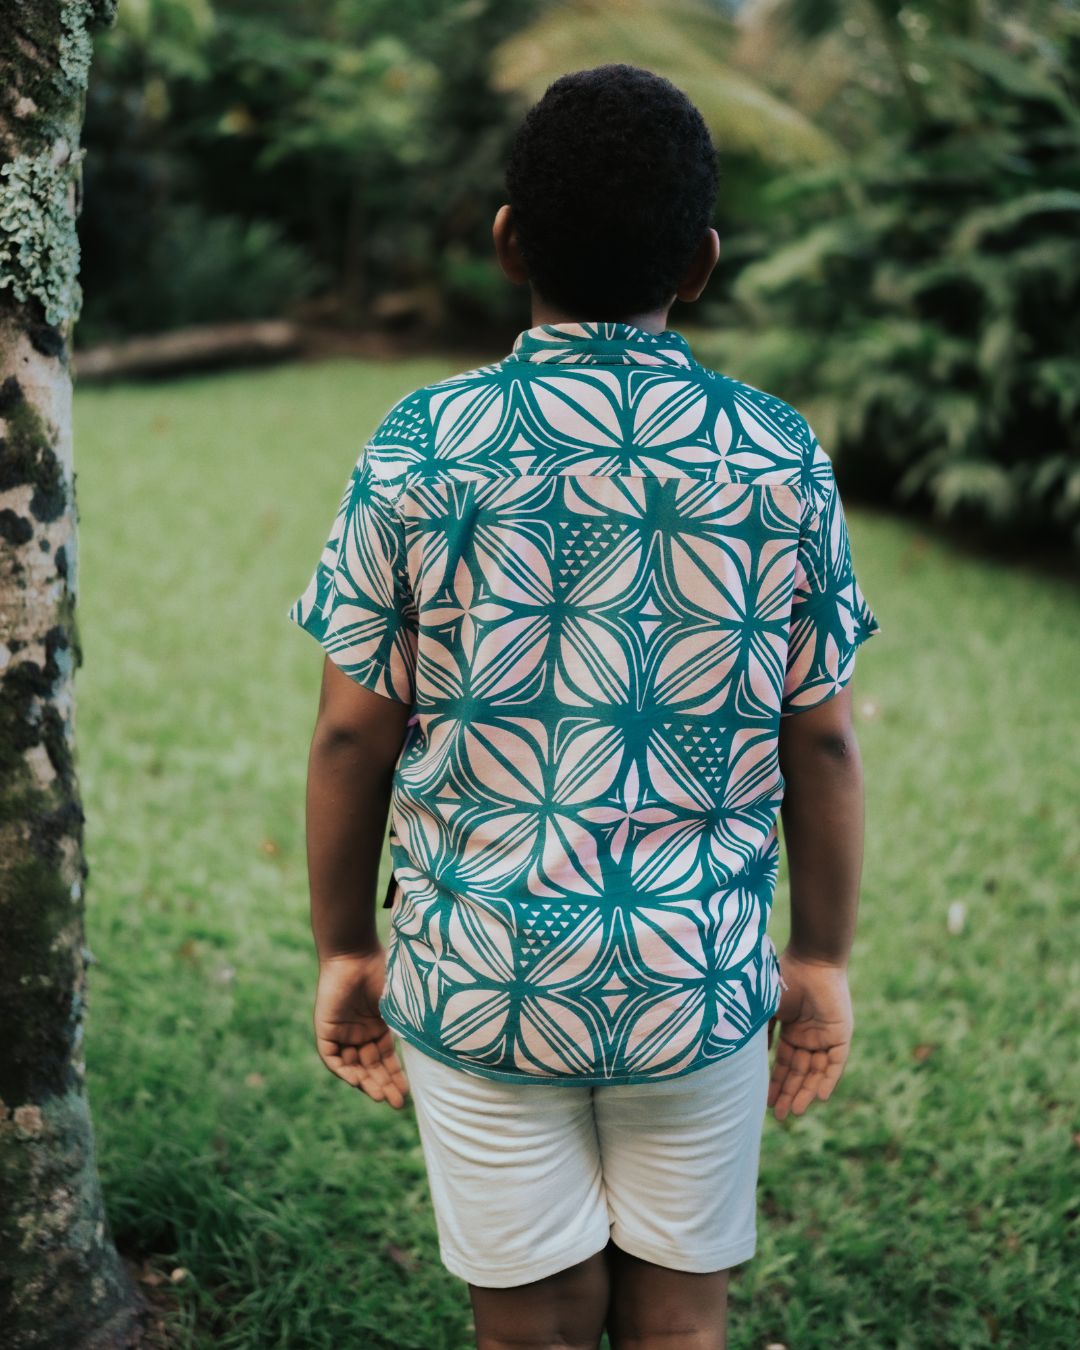 Kanoa Teen Short Sleeve Island Shirt - Pacific Floral Peach - Back